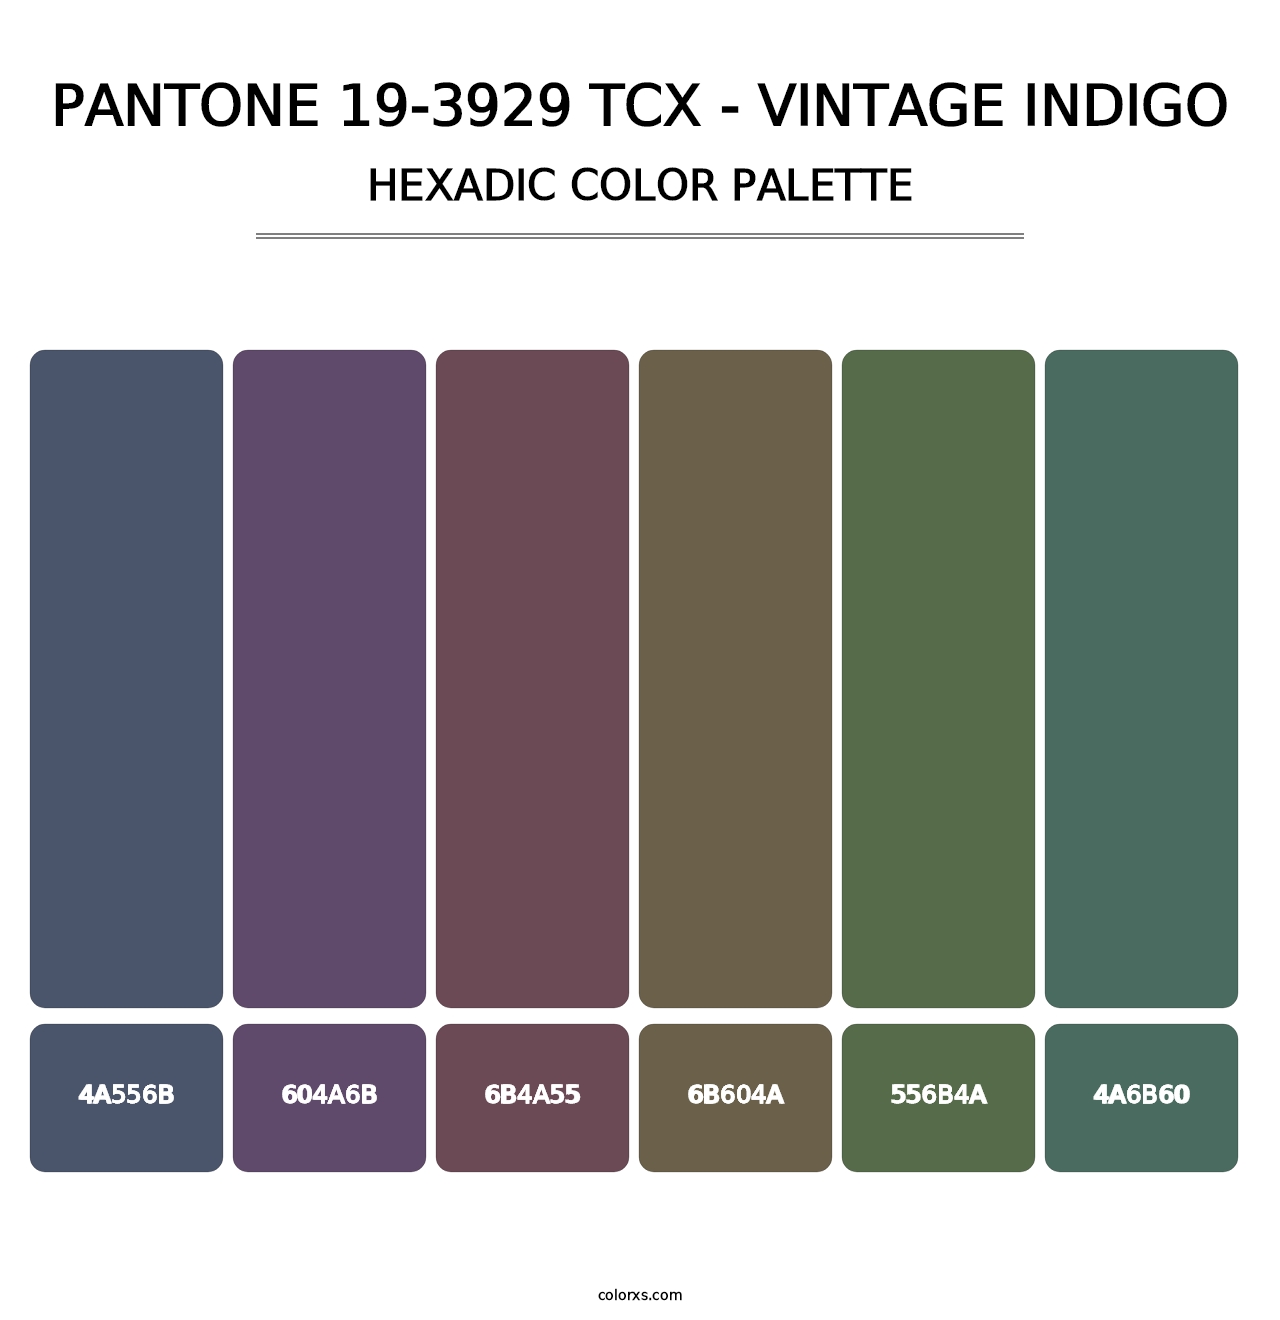 PANTONE 19-3929 TCX - Vintage Indigo - Hexadic Color Palette